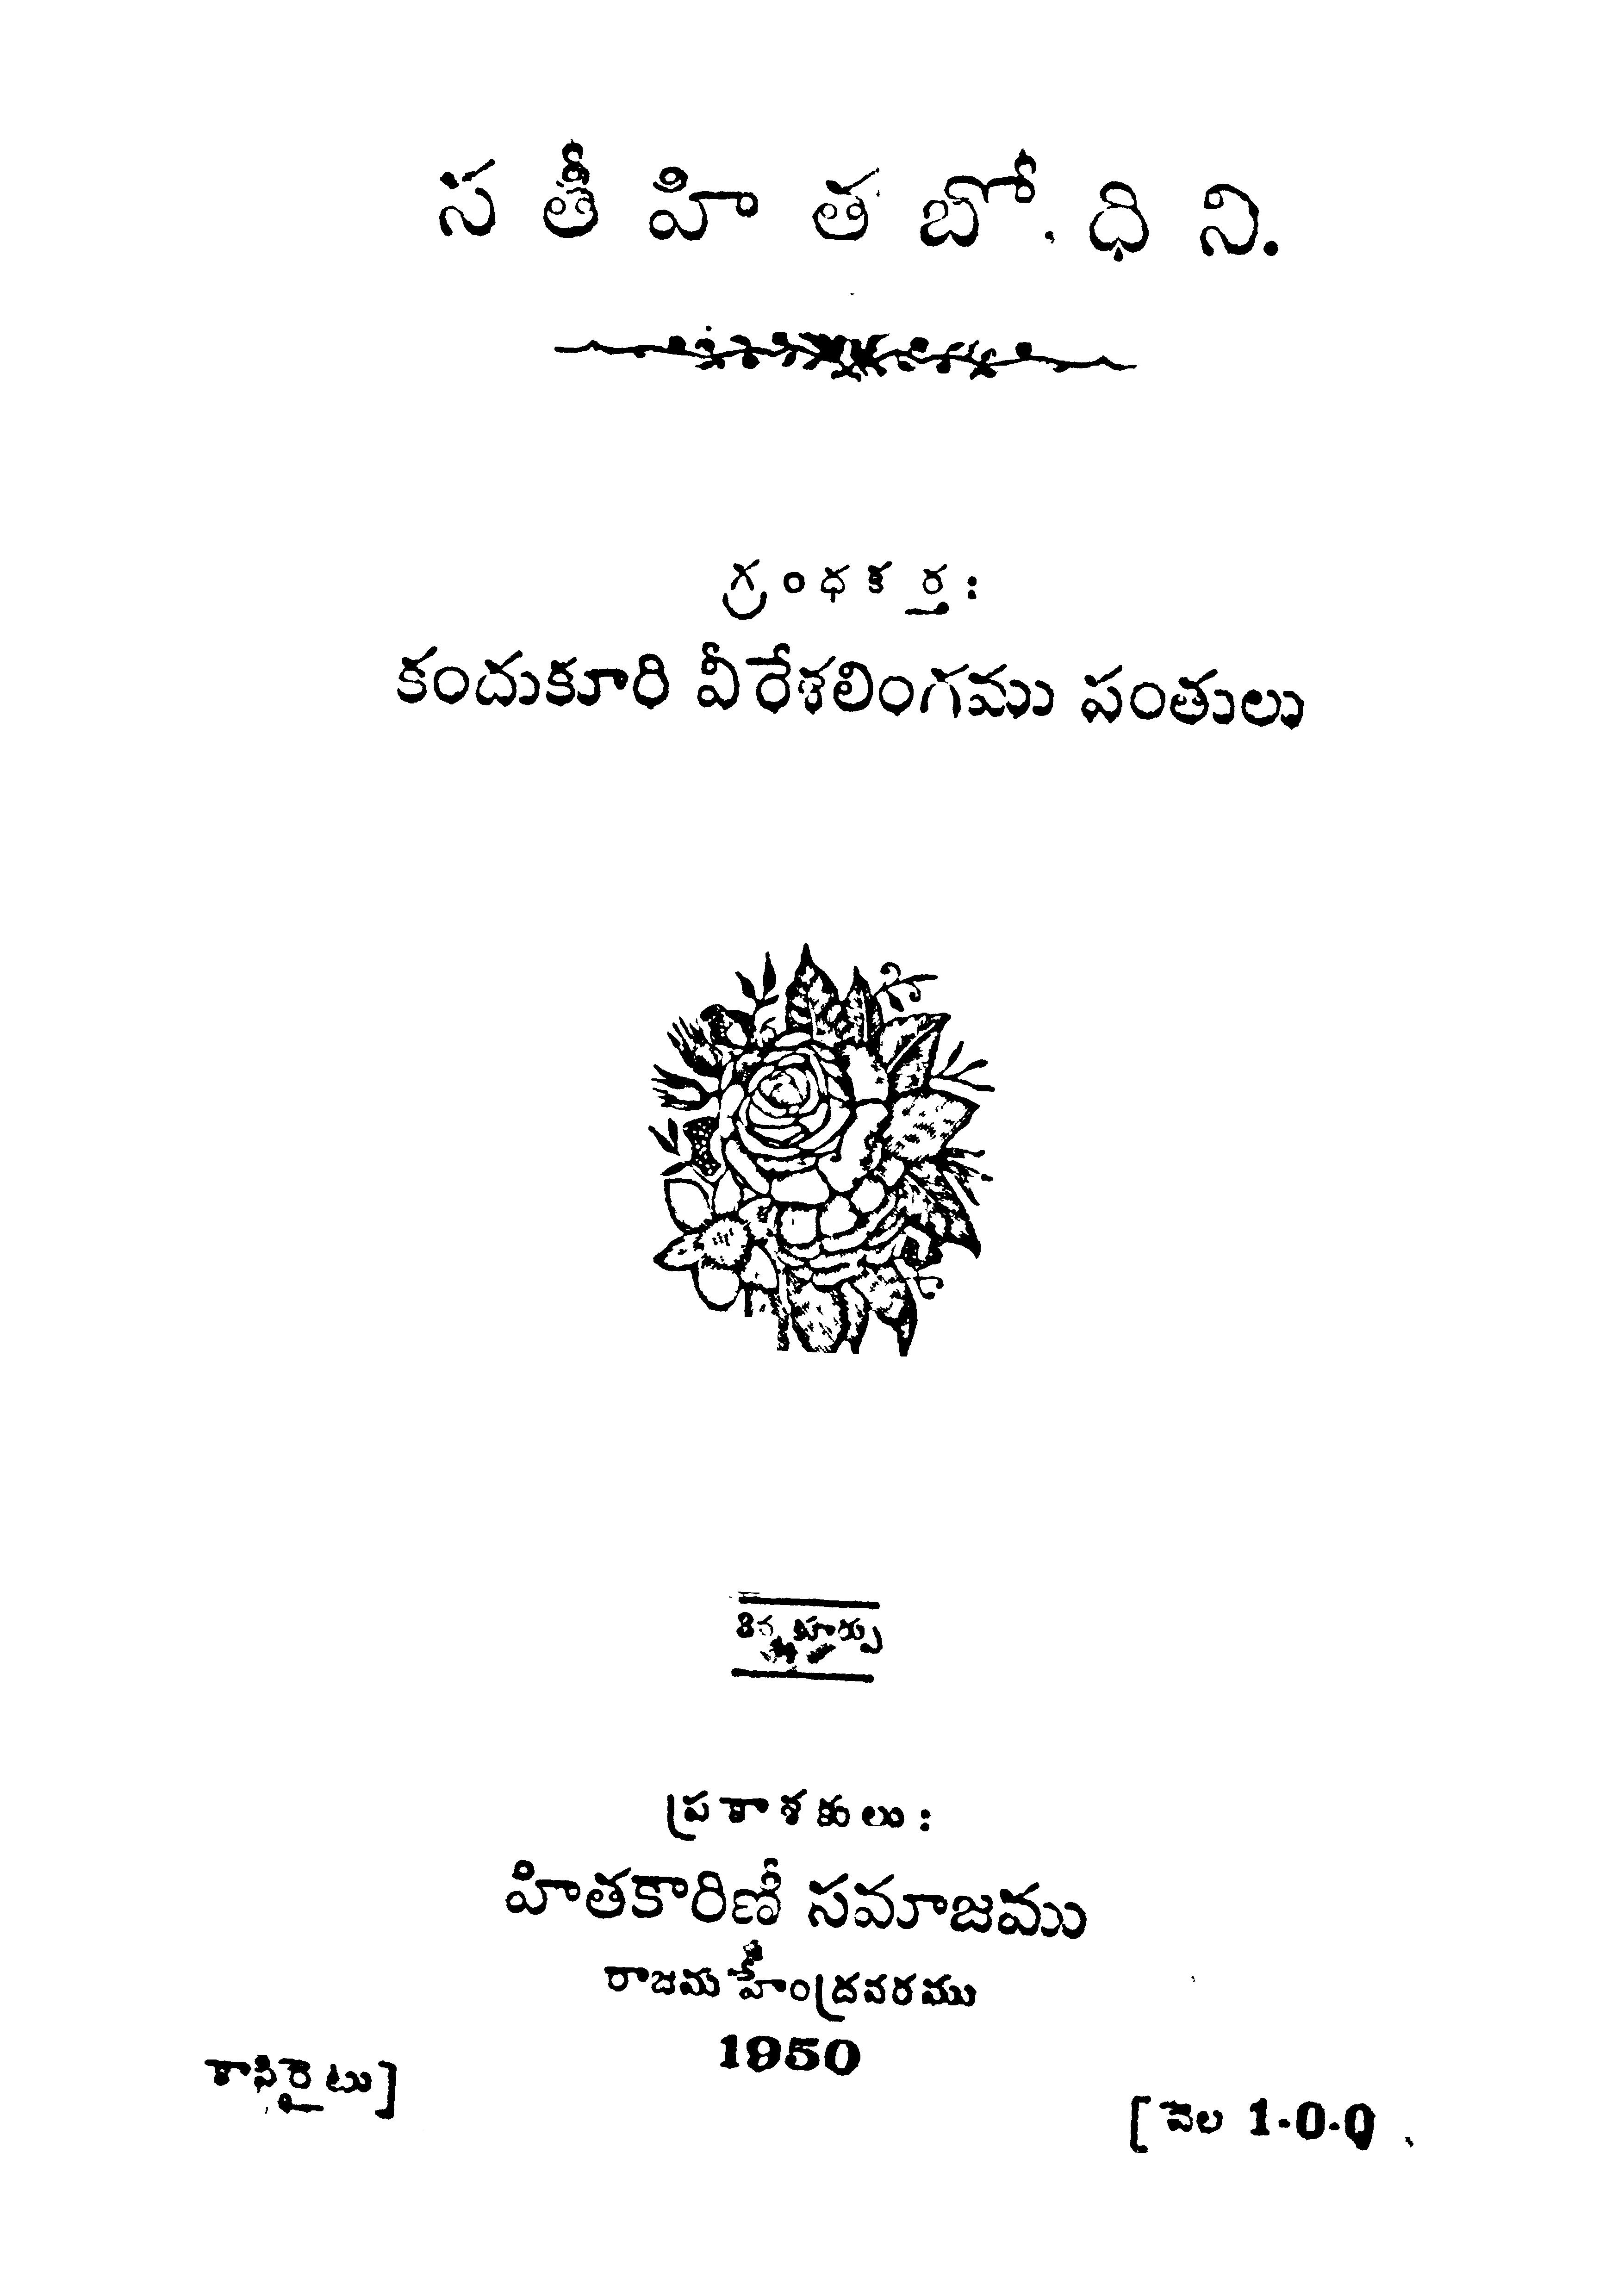 Sathihitha bodhini